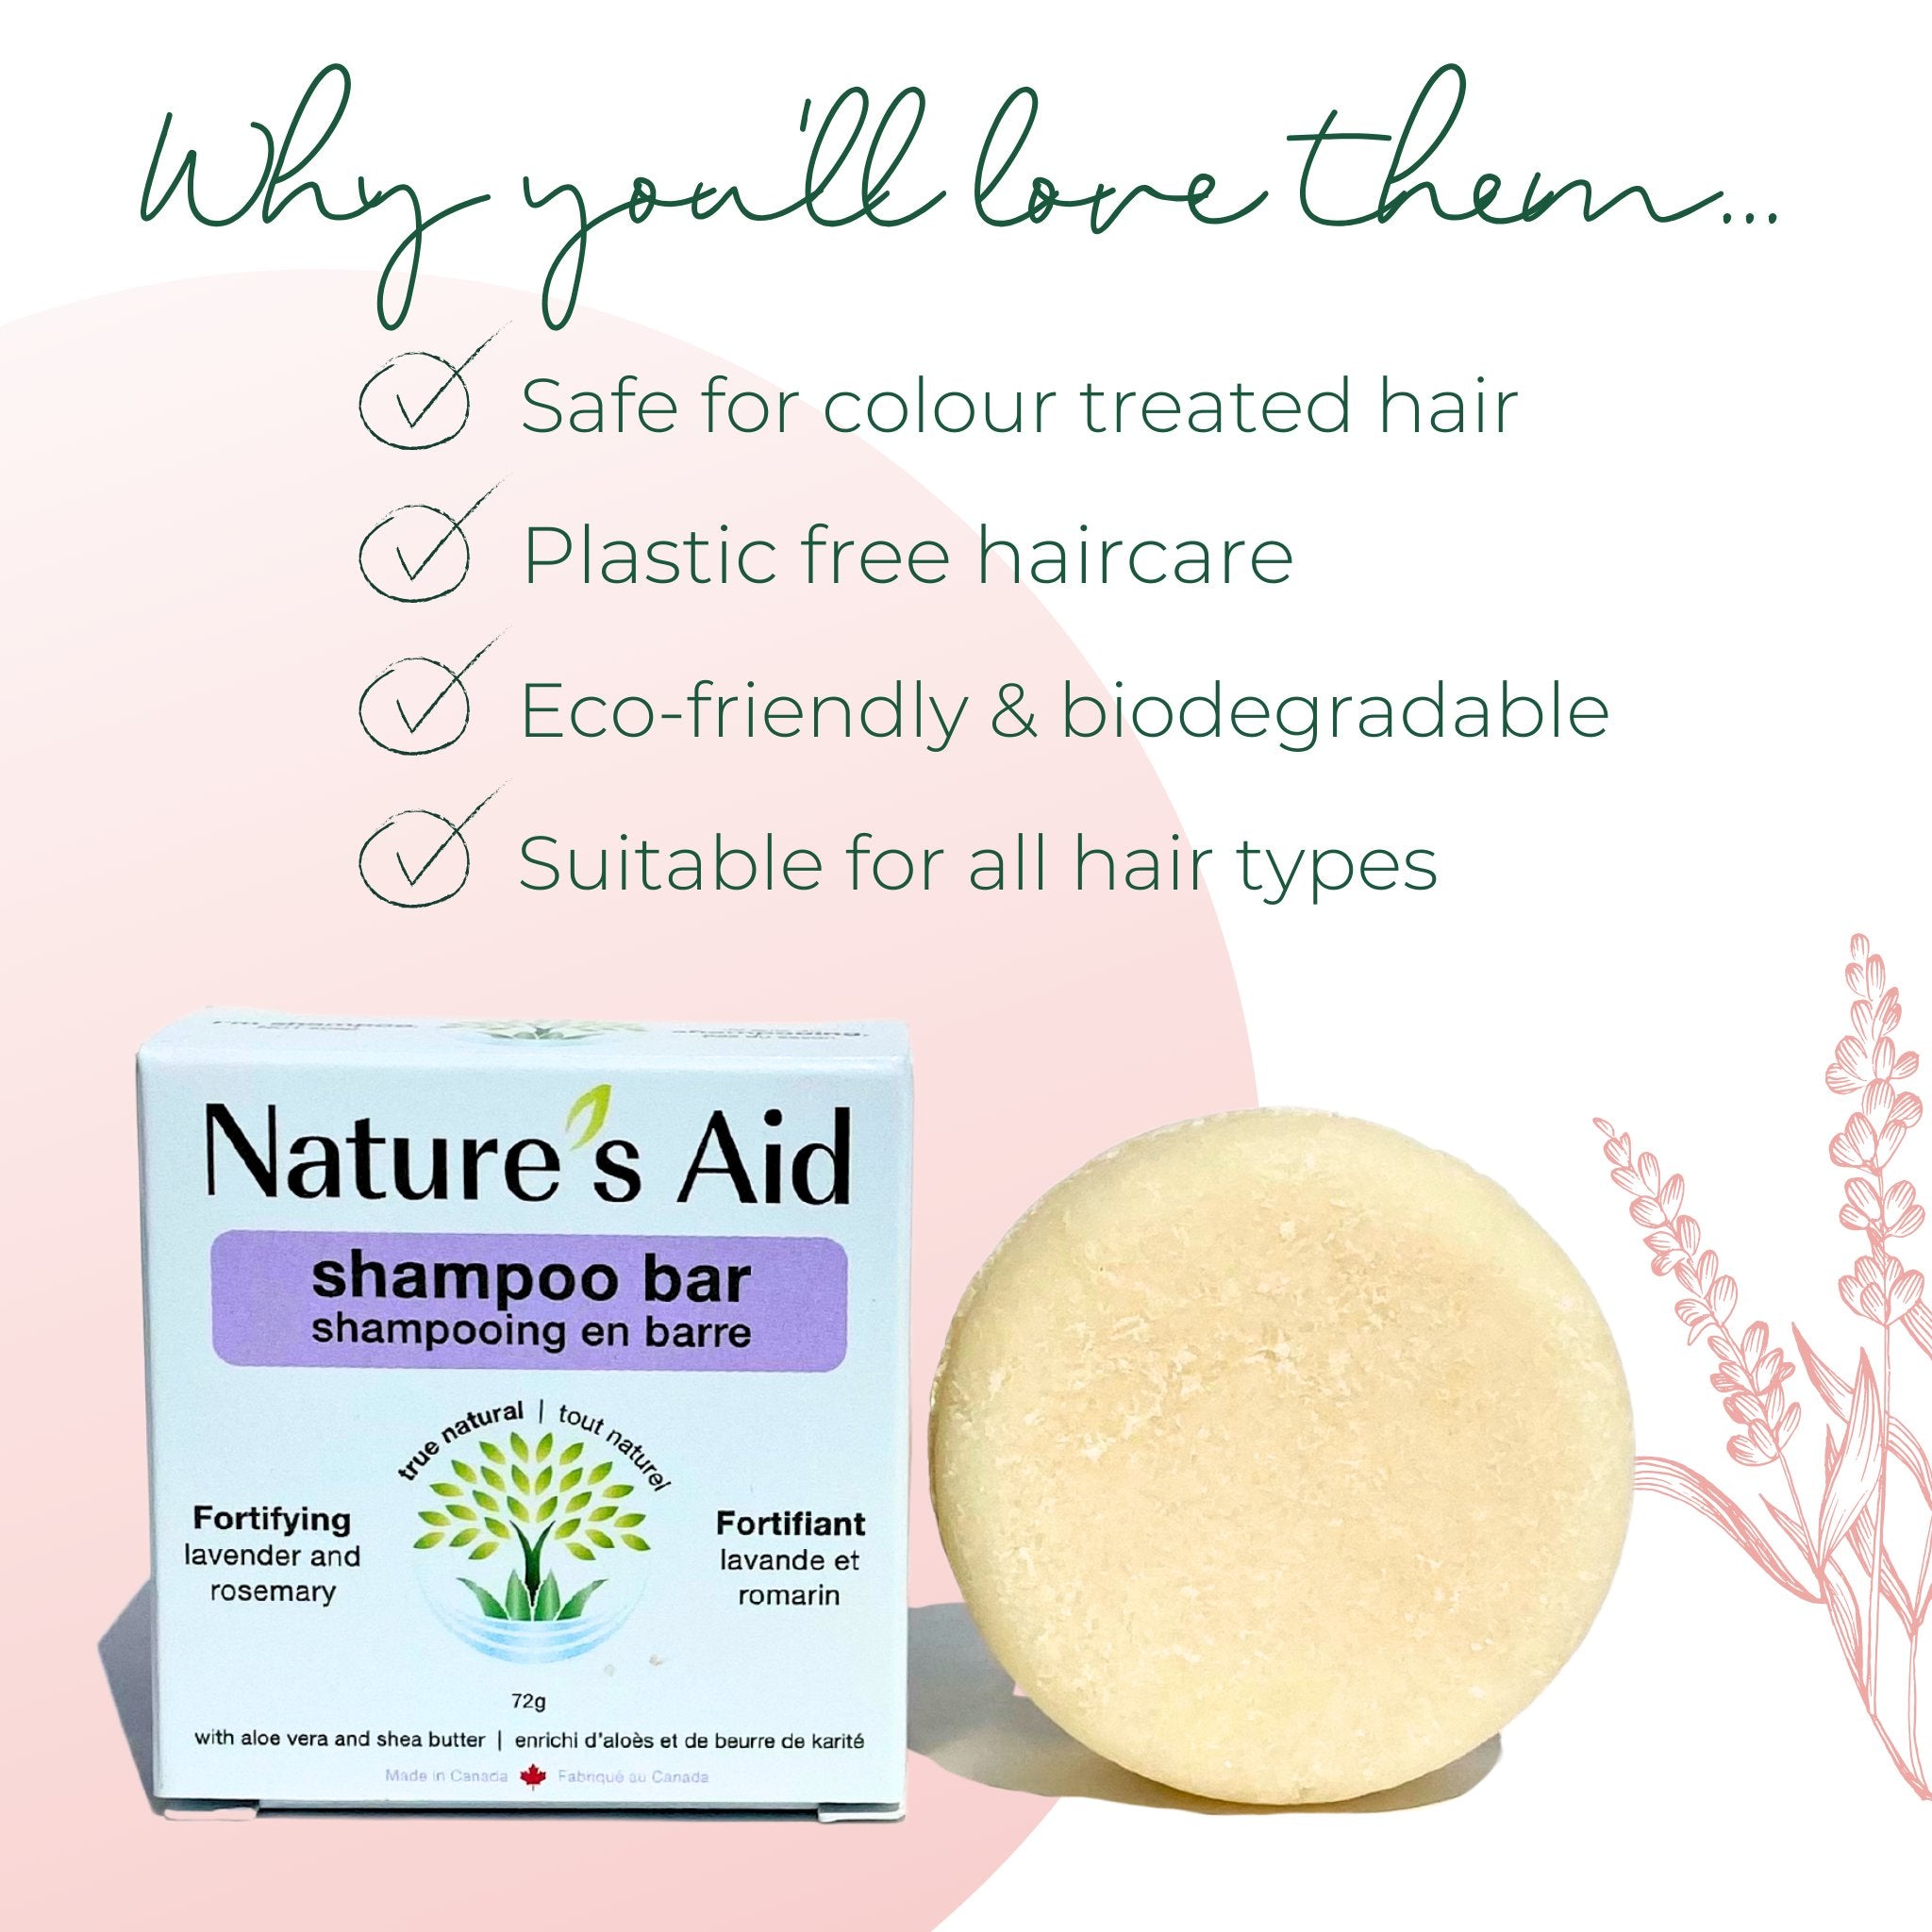 Shampoo | 72g Solid Bars - Nature's Aid, cedarwood, ecofriendly